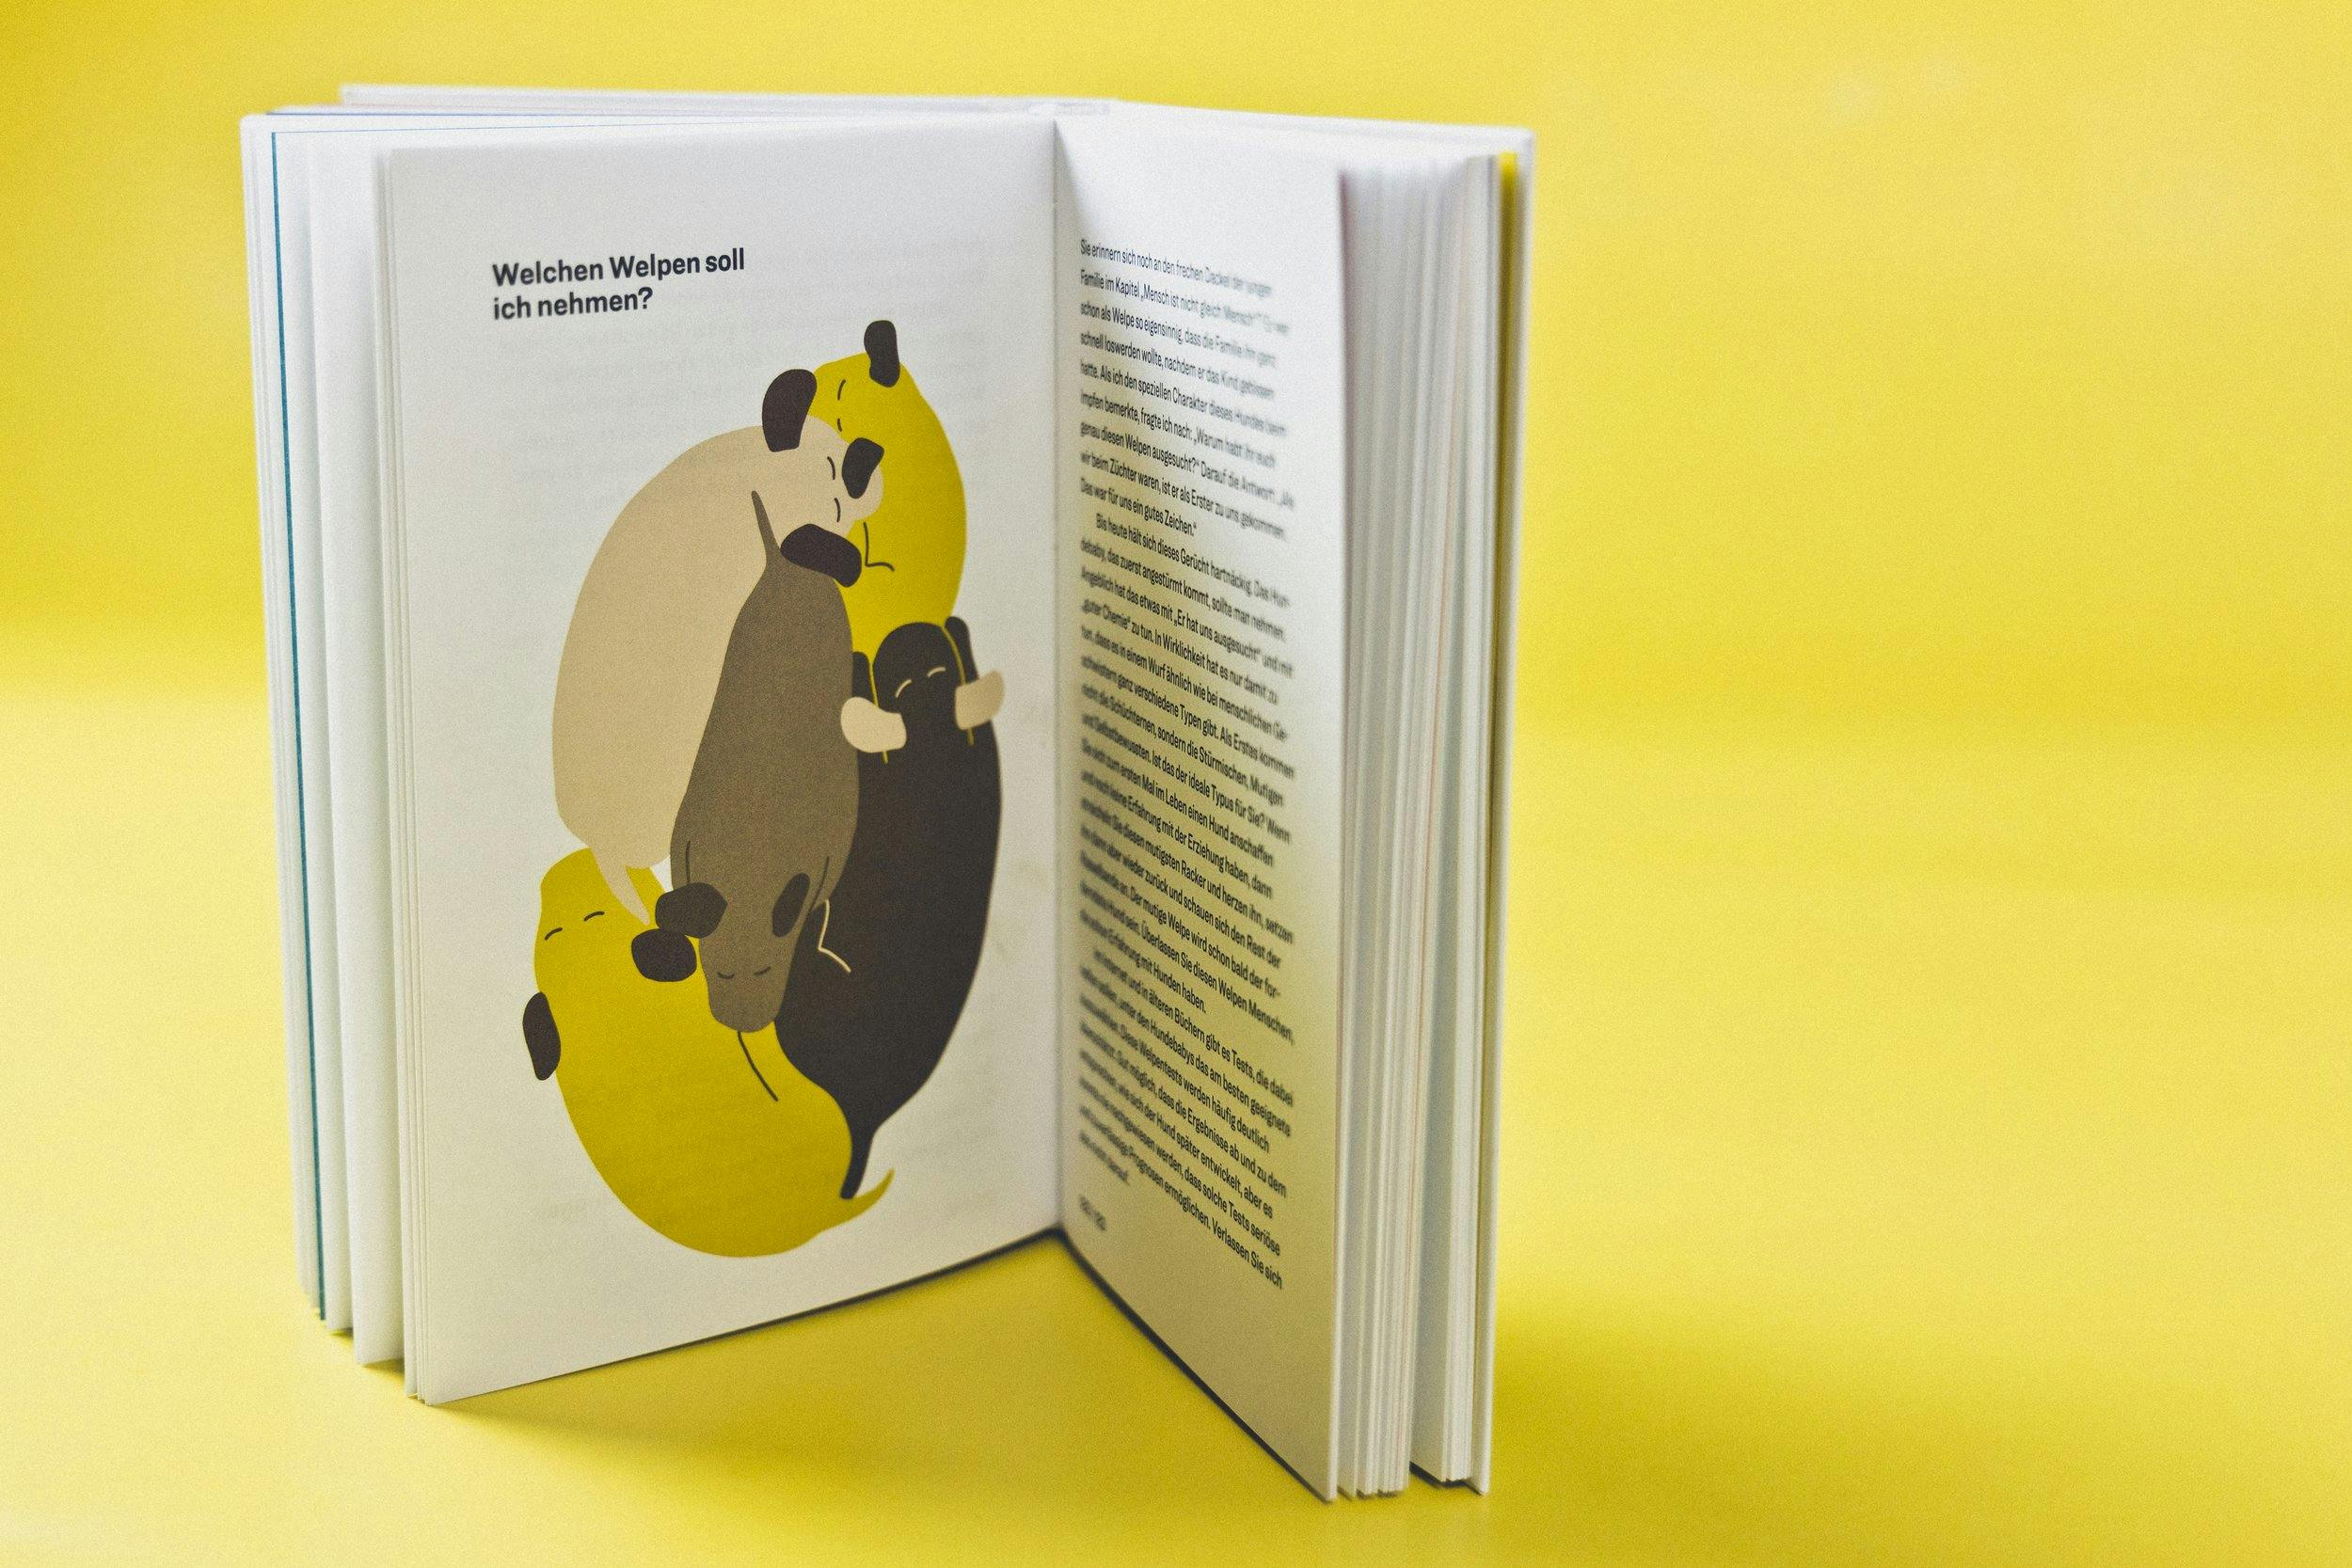 How to Hund - Tanja Warter - Zeughaus Design © Patricia Keckeis